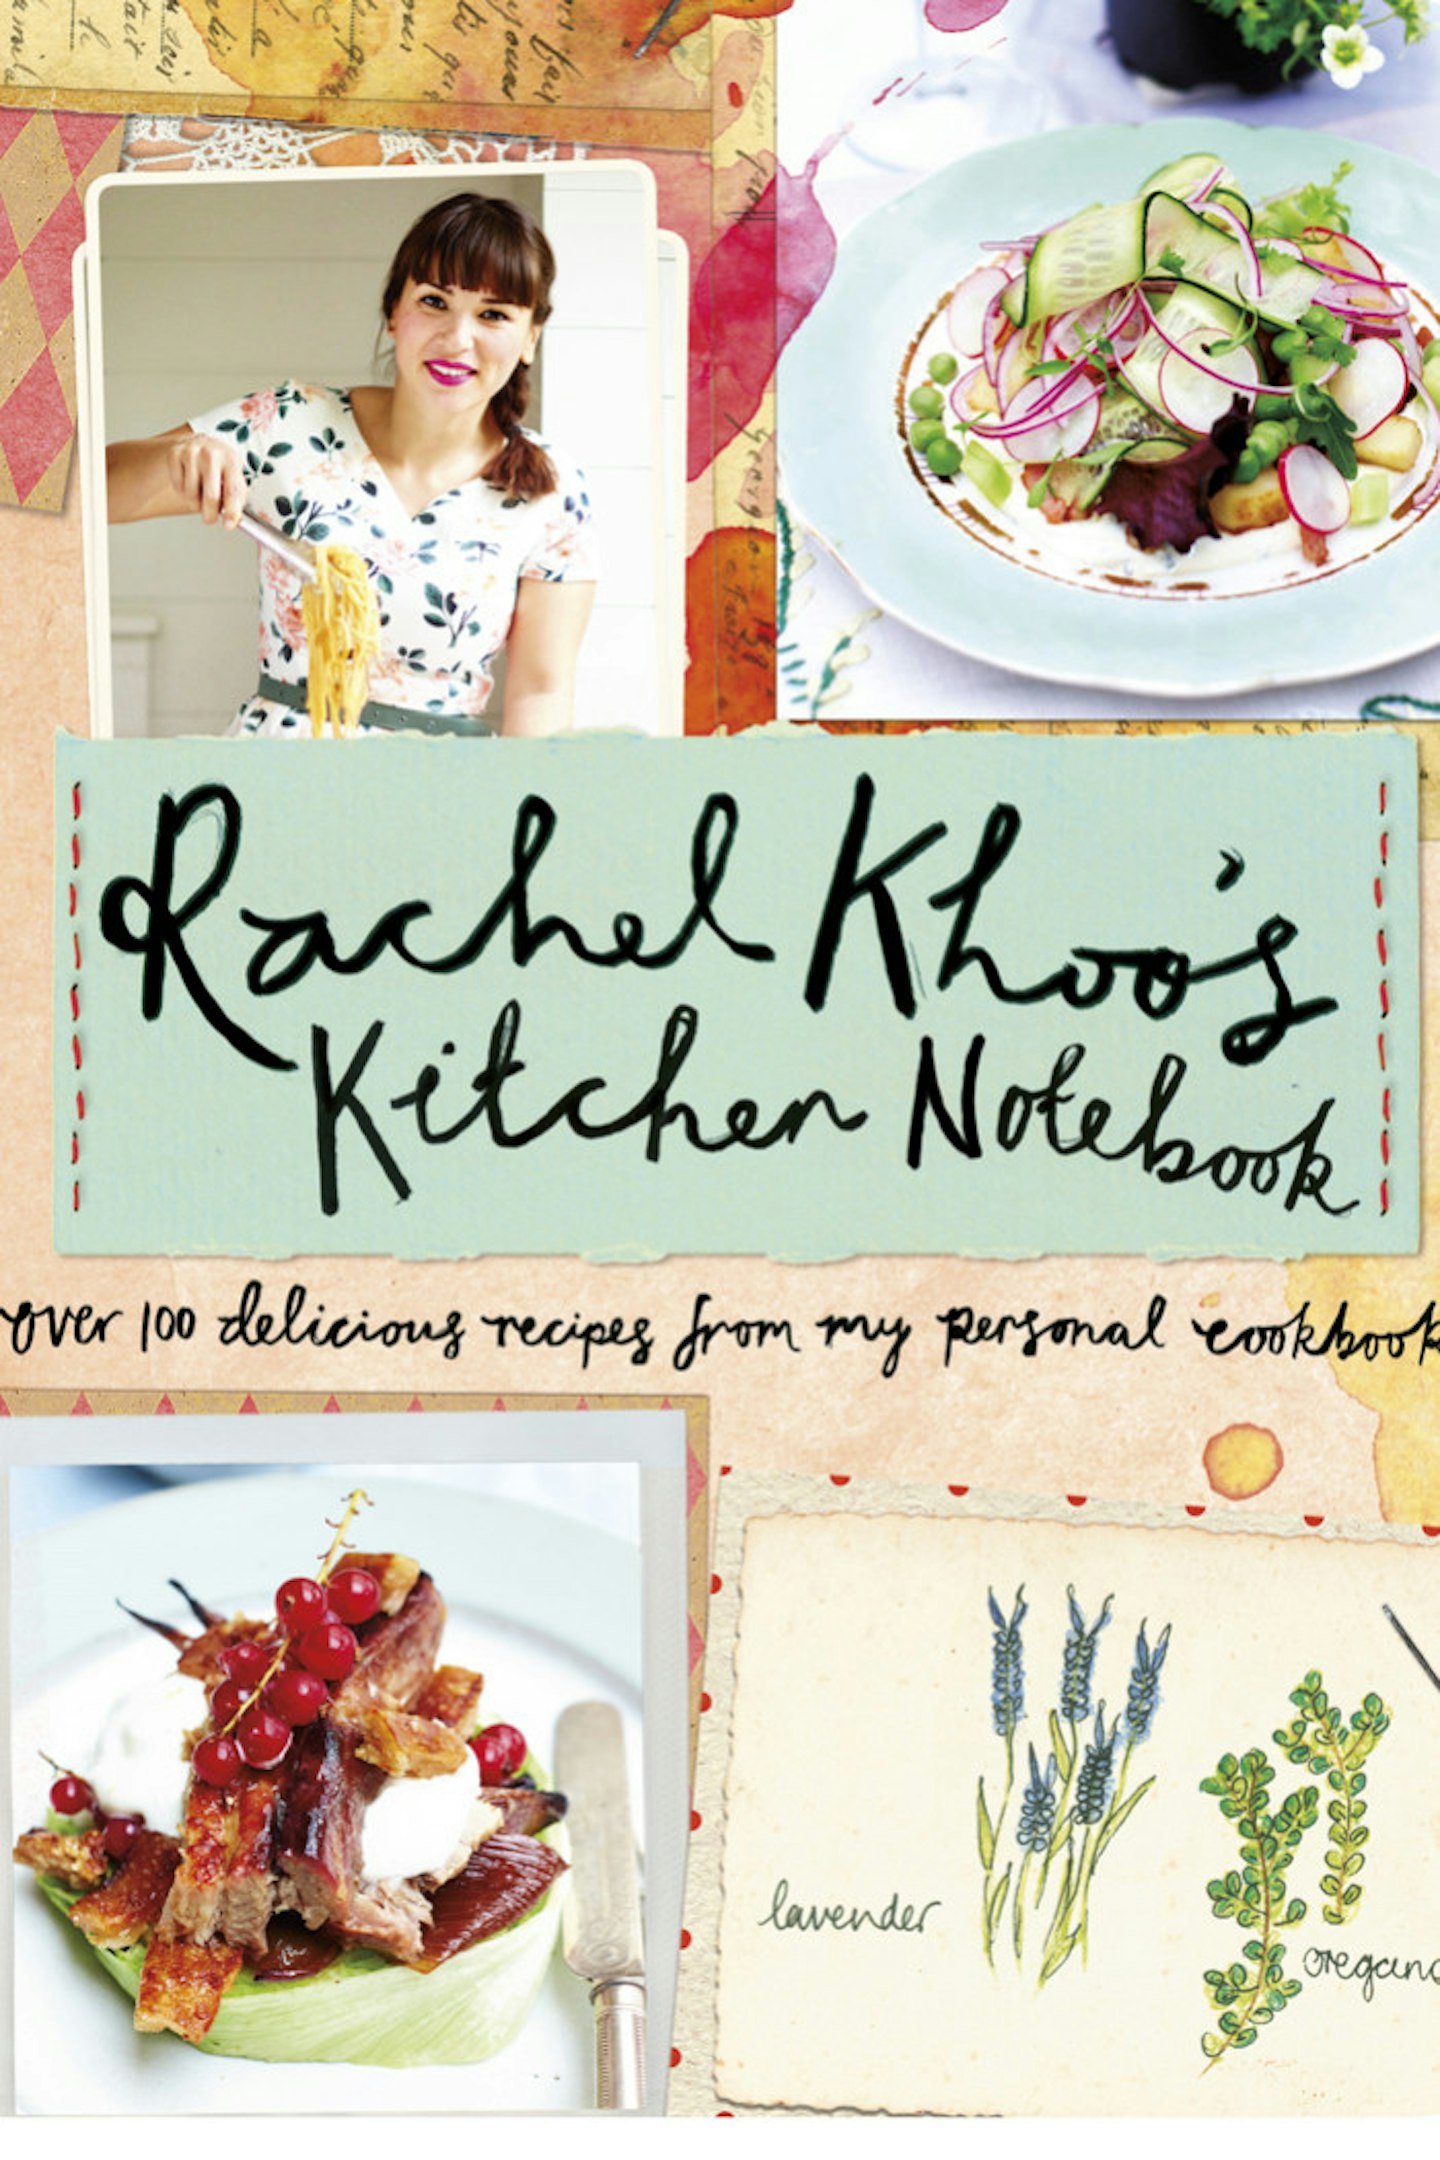 Rachel Khoo's Kitchen Notes